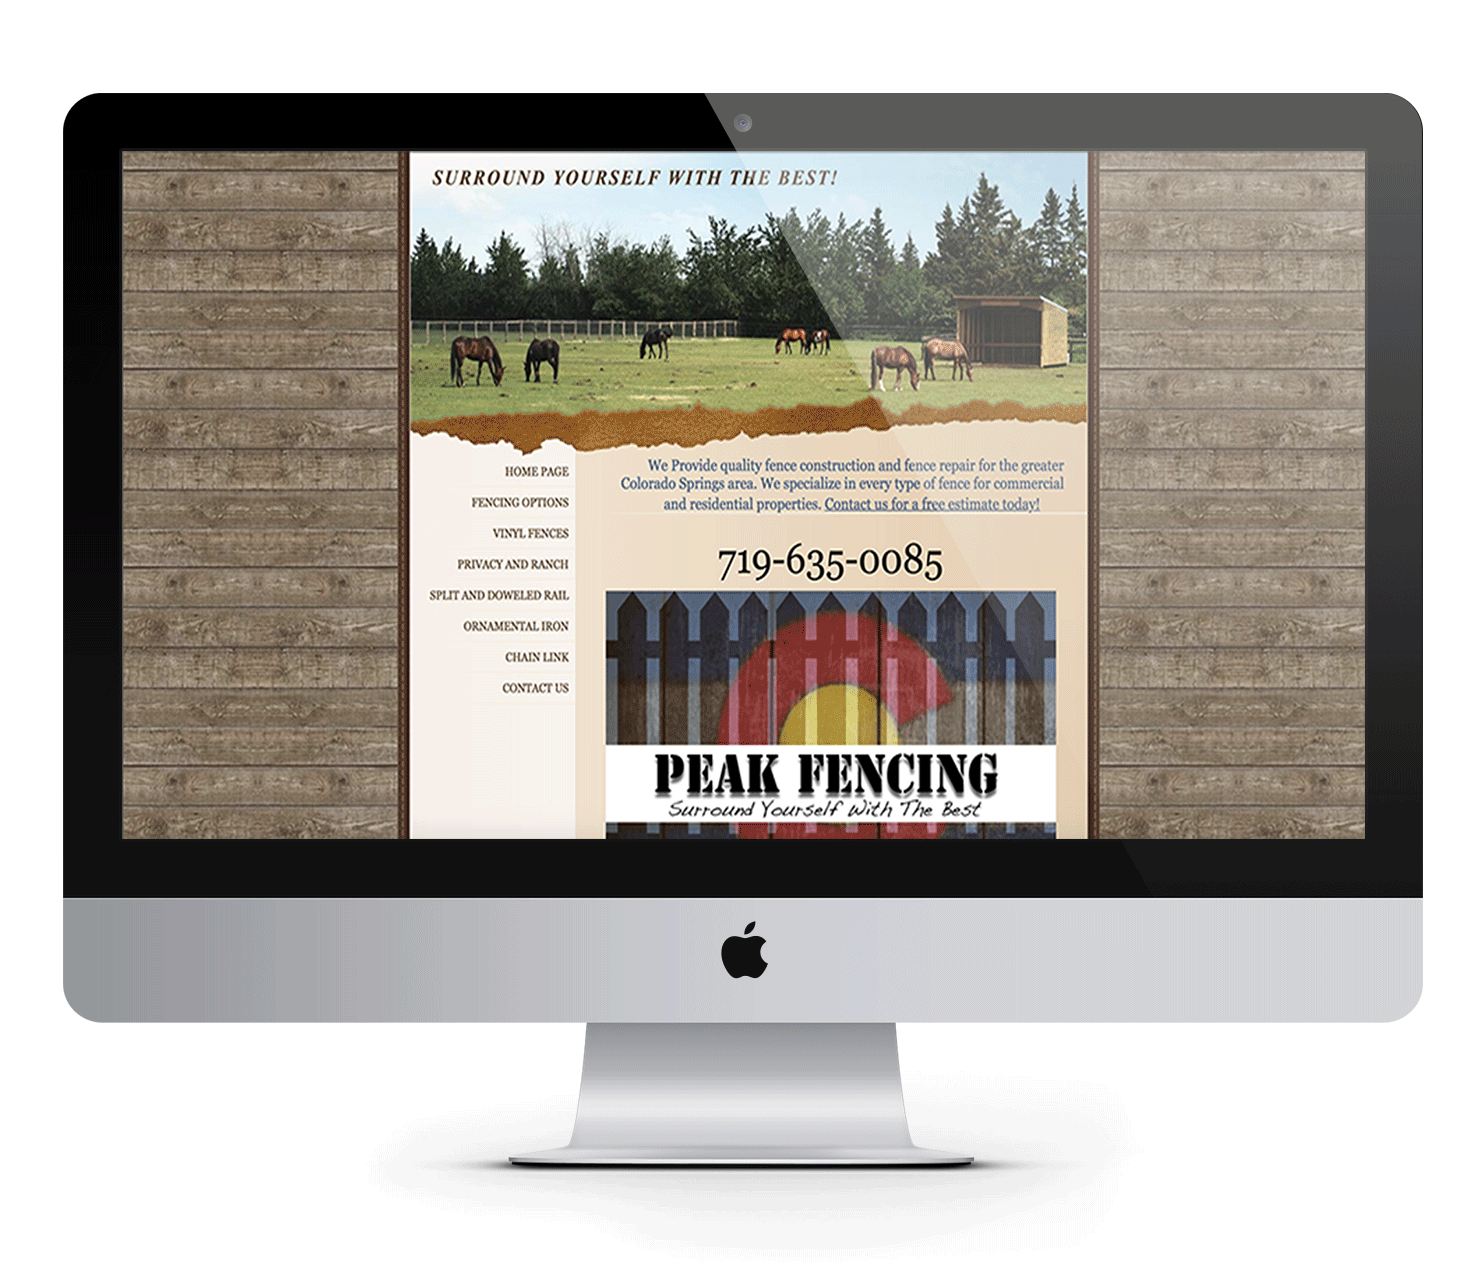 Old Peak Fencing website shown on an imac